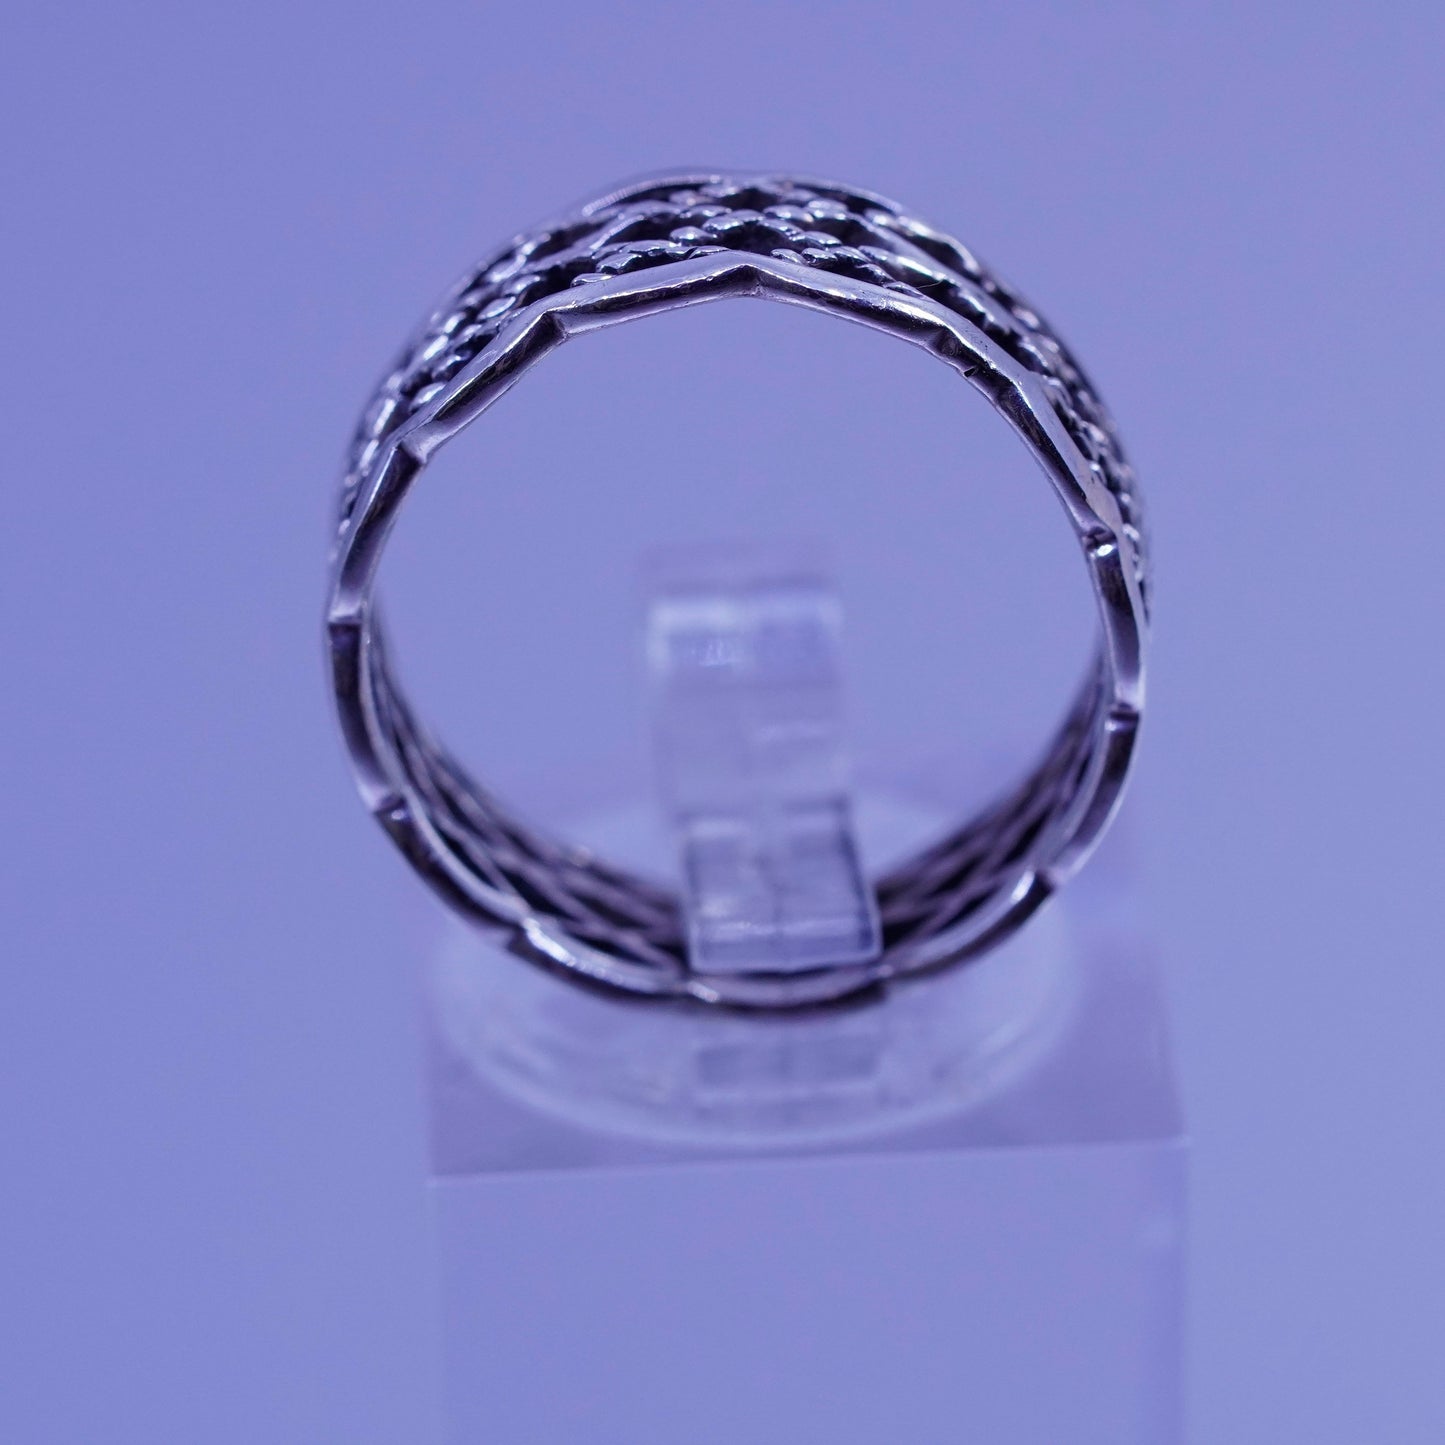 Size 7.5, vintage Sterling 925 silver handmade ring, filigree band